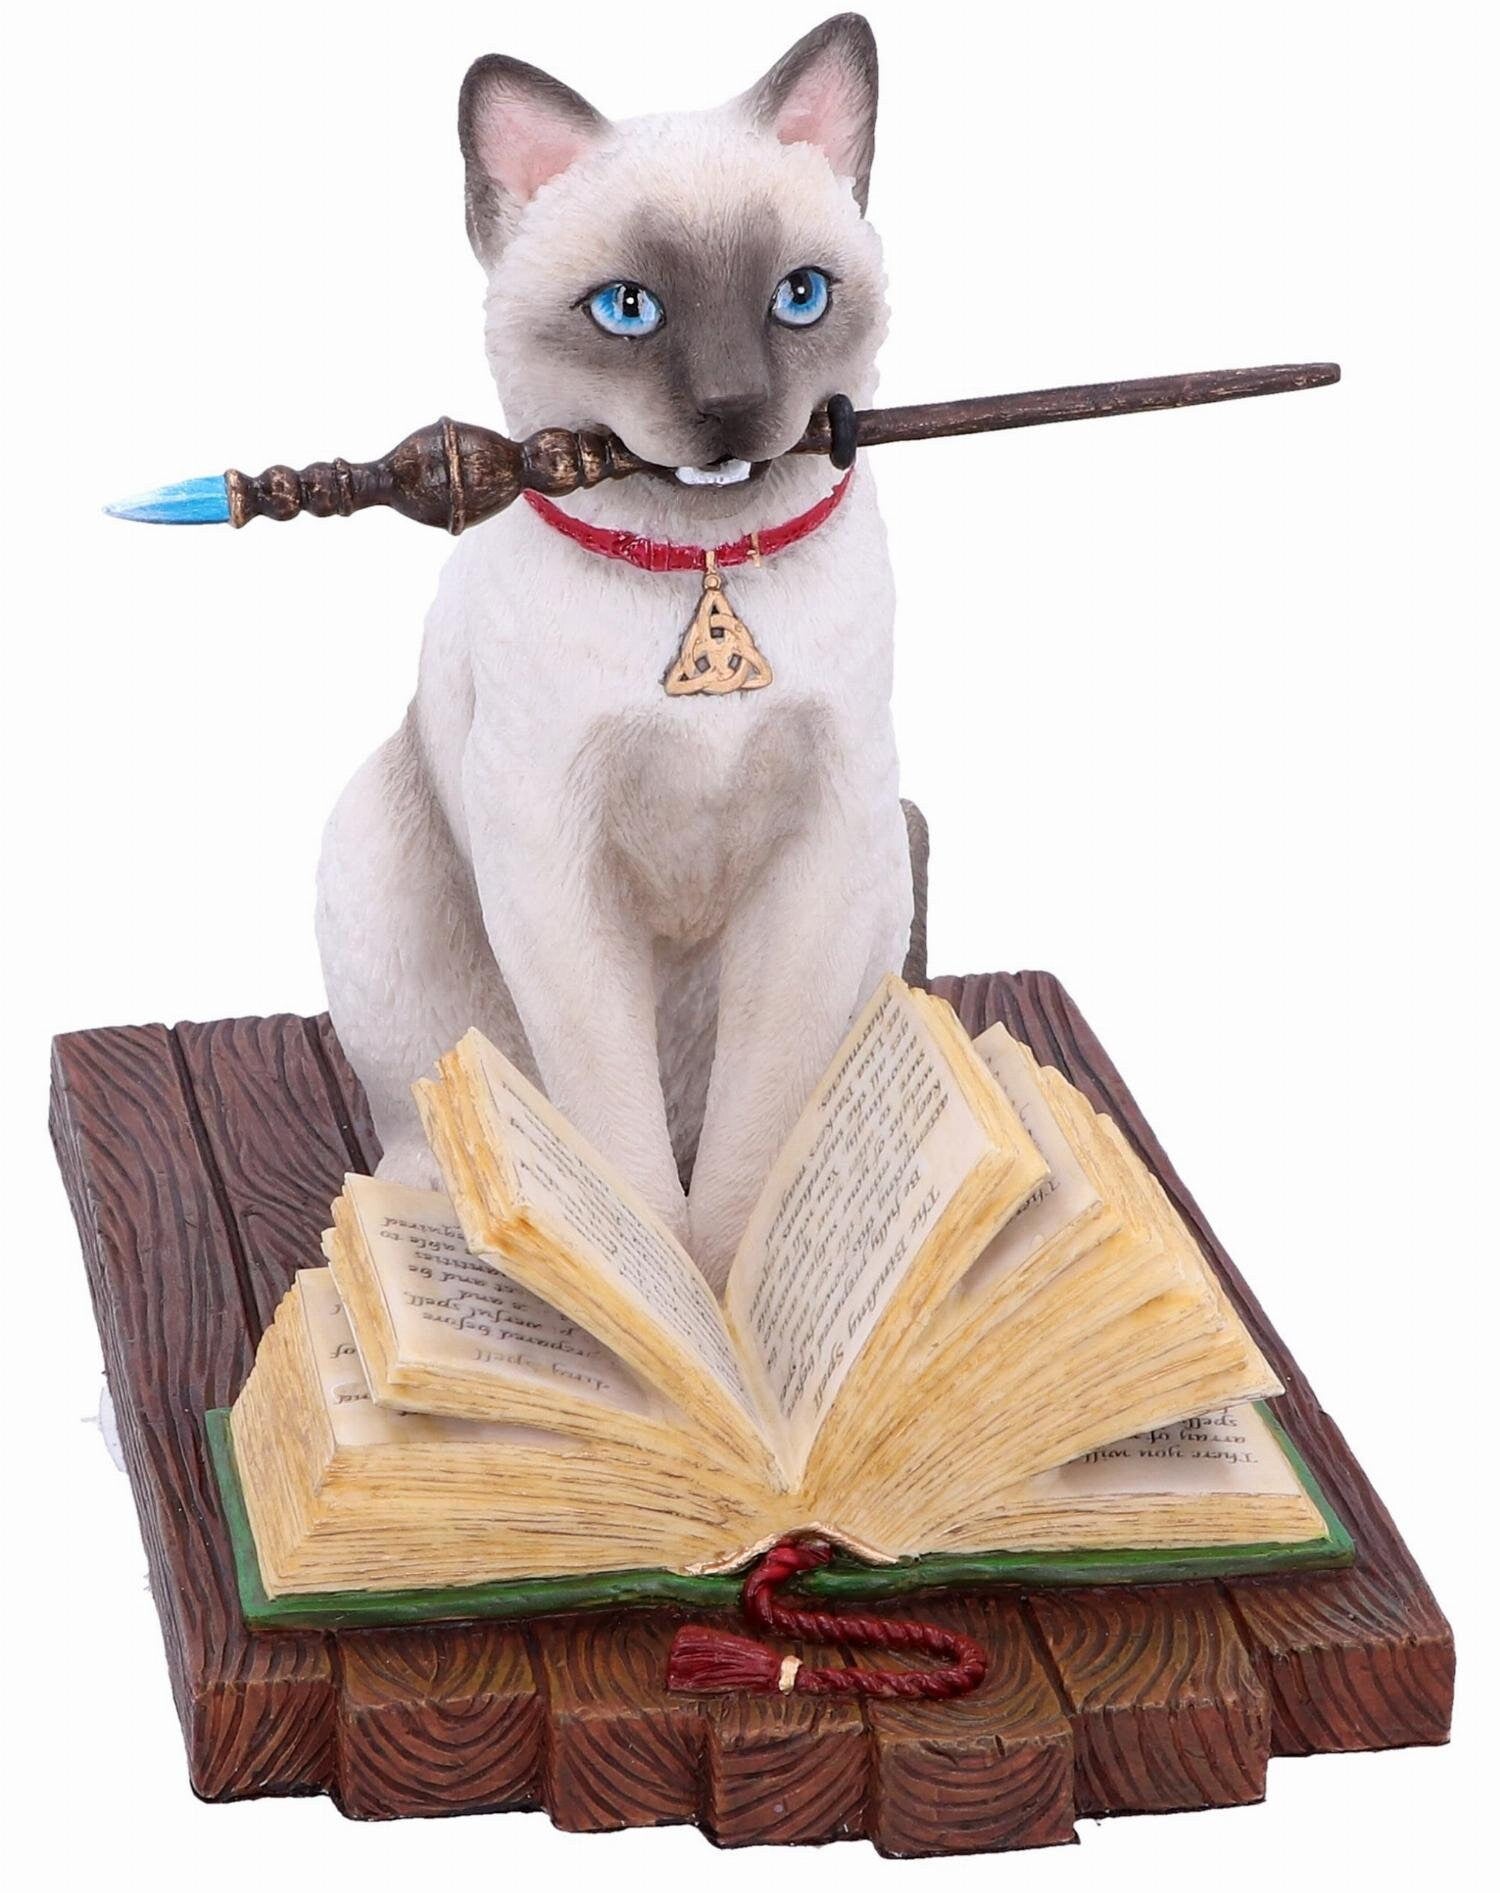 Hocus Pocus Cat Figurine Witchcraft decor Halloween gift